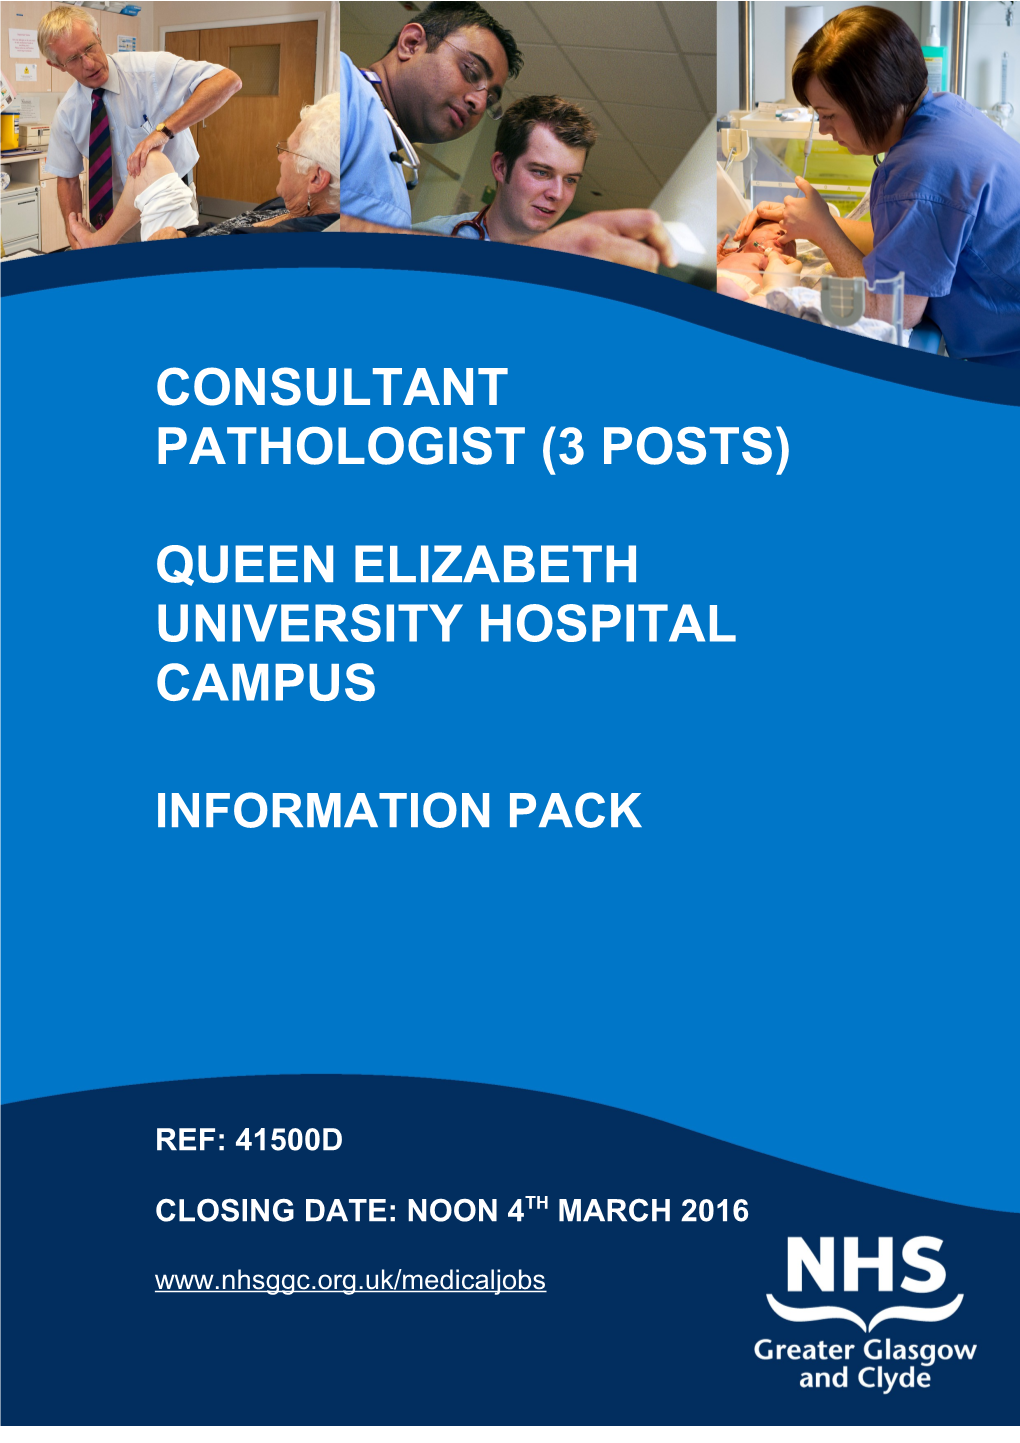 Queen Elizabeth University Hospital Campus